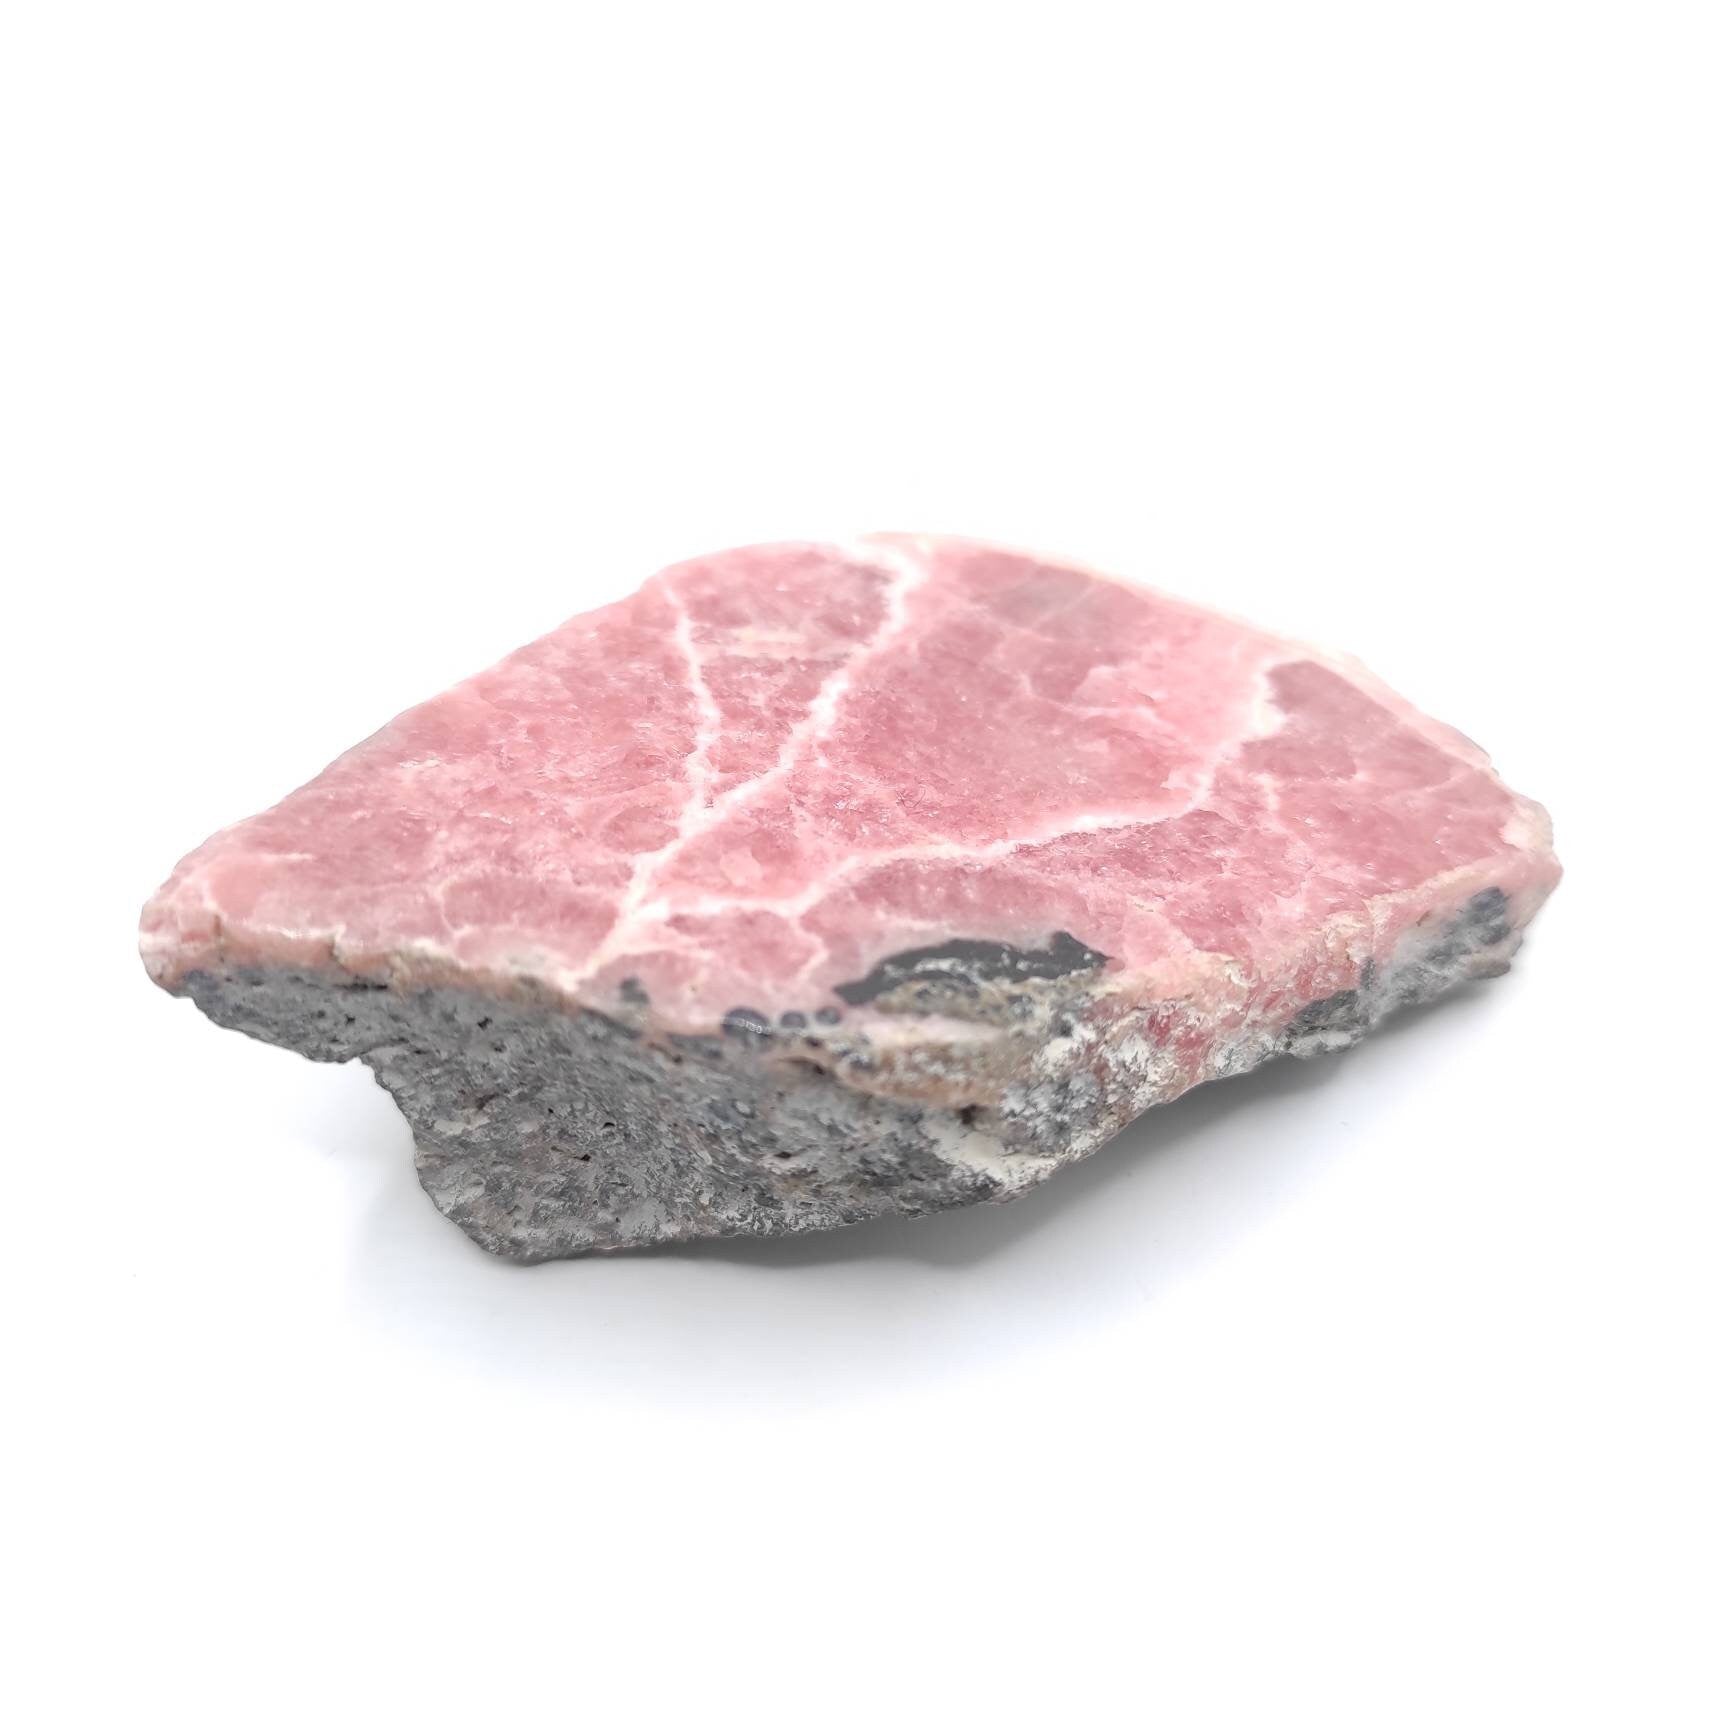 127g Rhodochrosite Freeform Specimen - Natural Pink Red Rhodochrosite - Andalgala, Catamarca, Argentina - Polished Rhodochrosite Crystal Gem